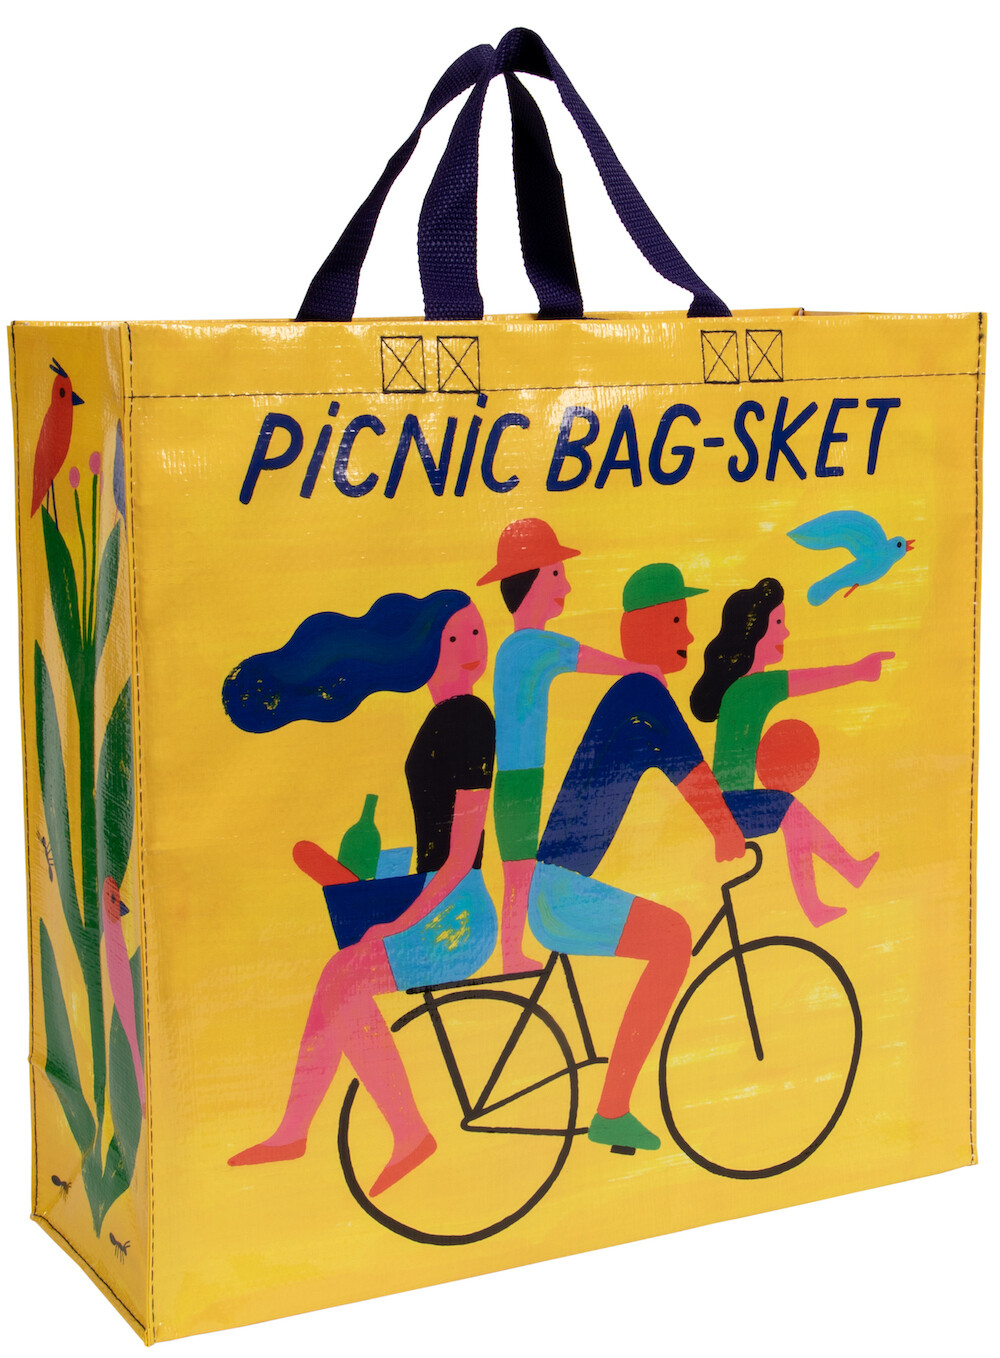 Sac shopper Picnic Bag-Sket